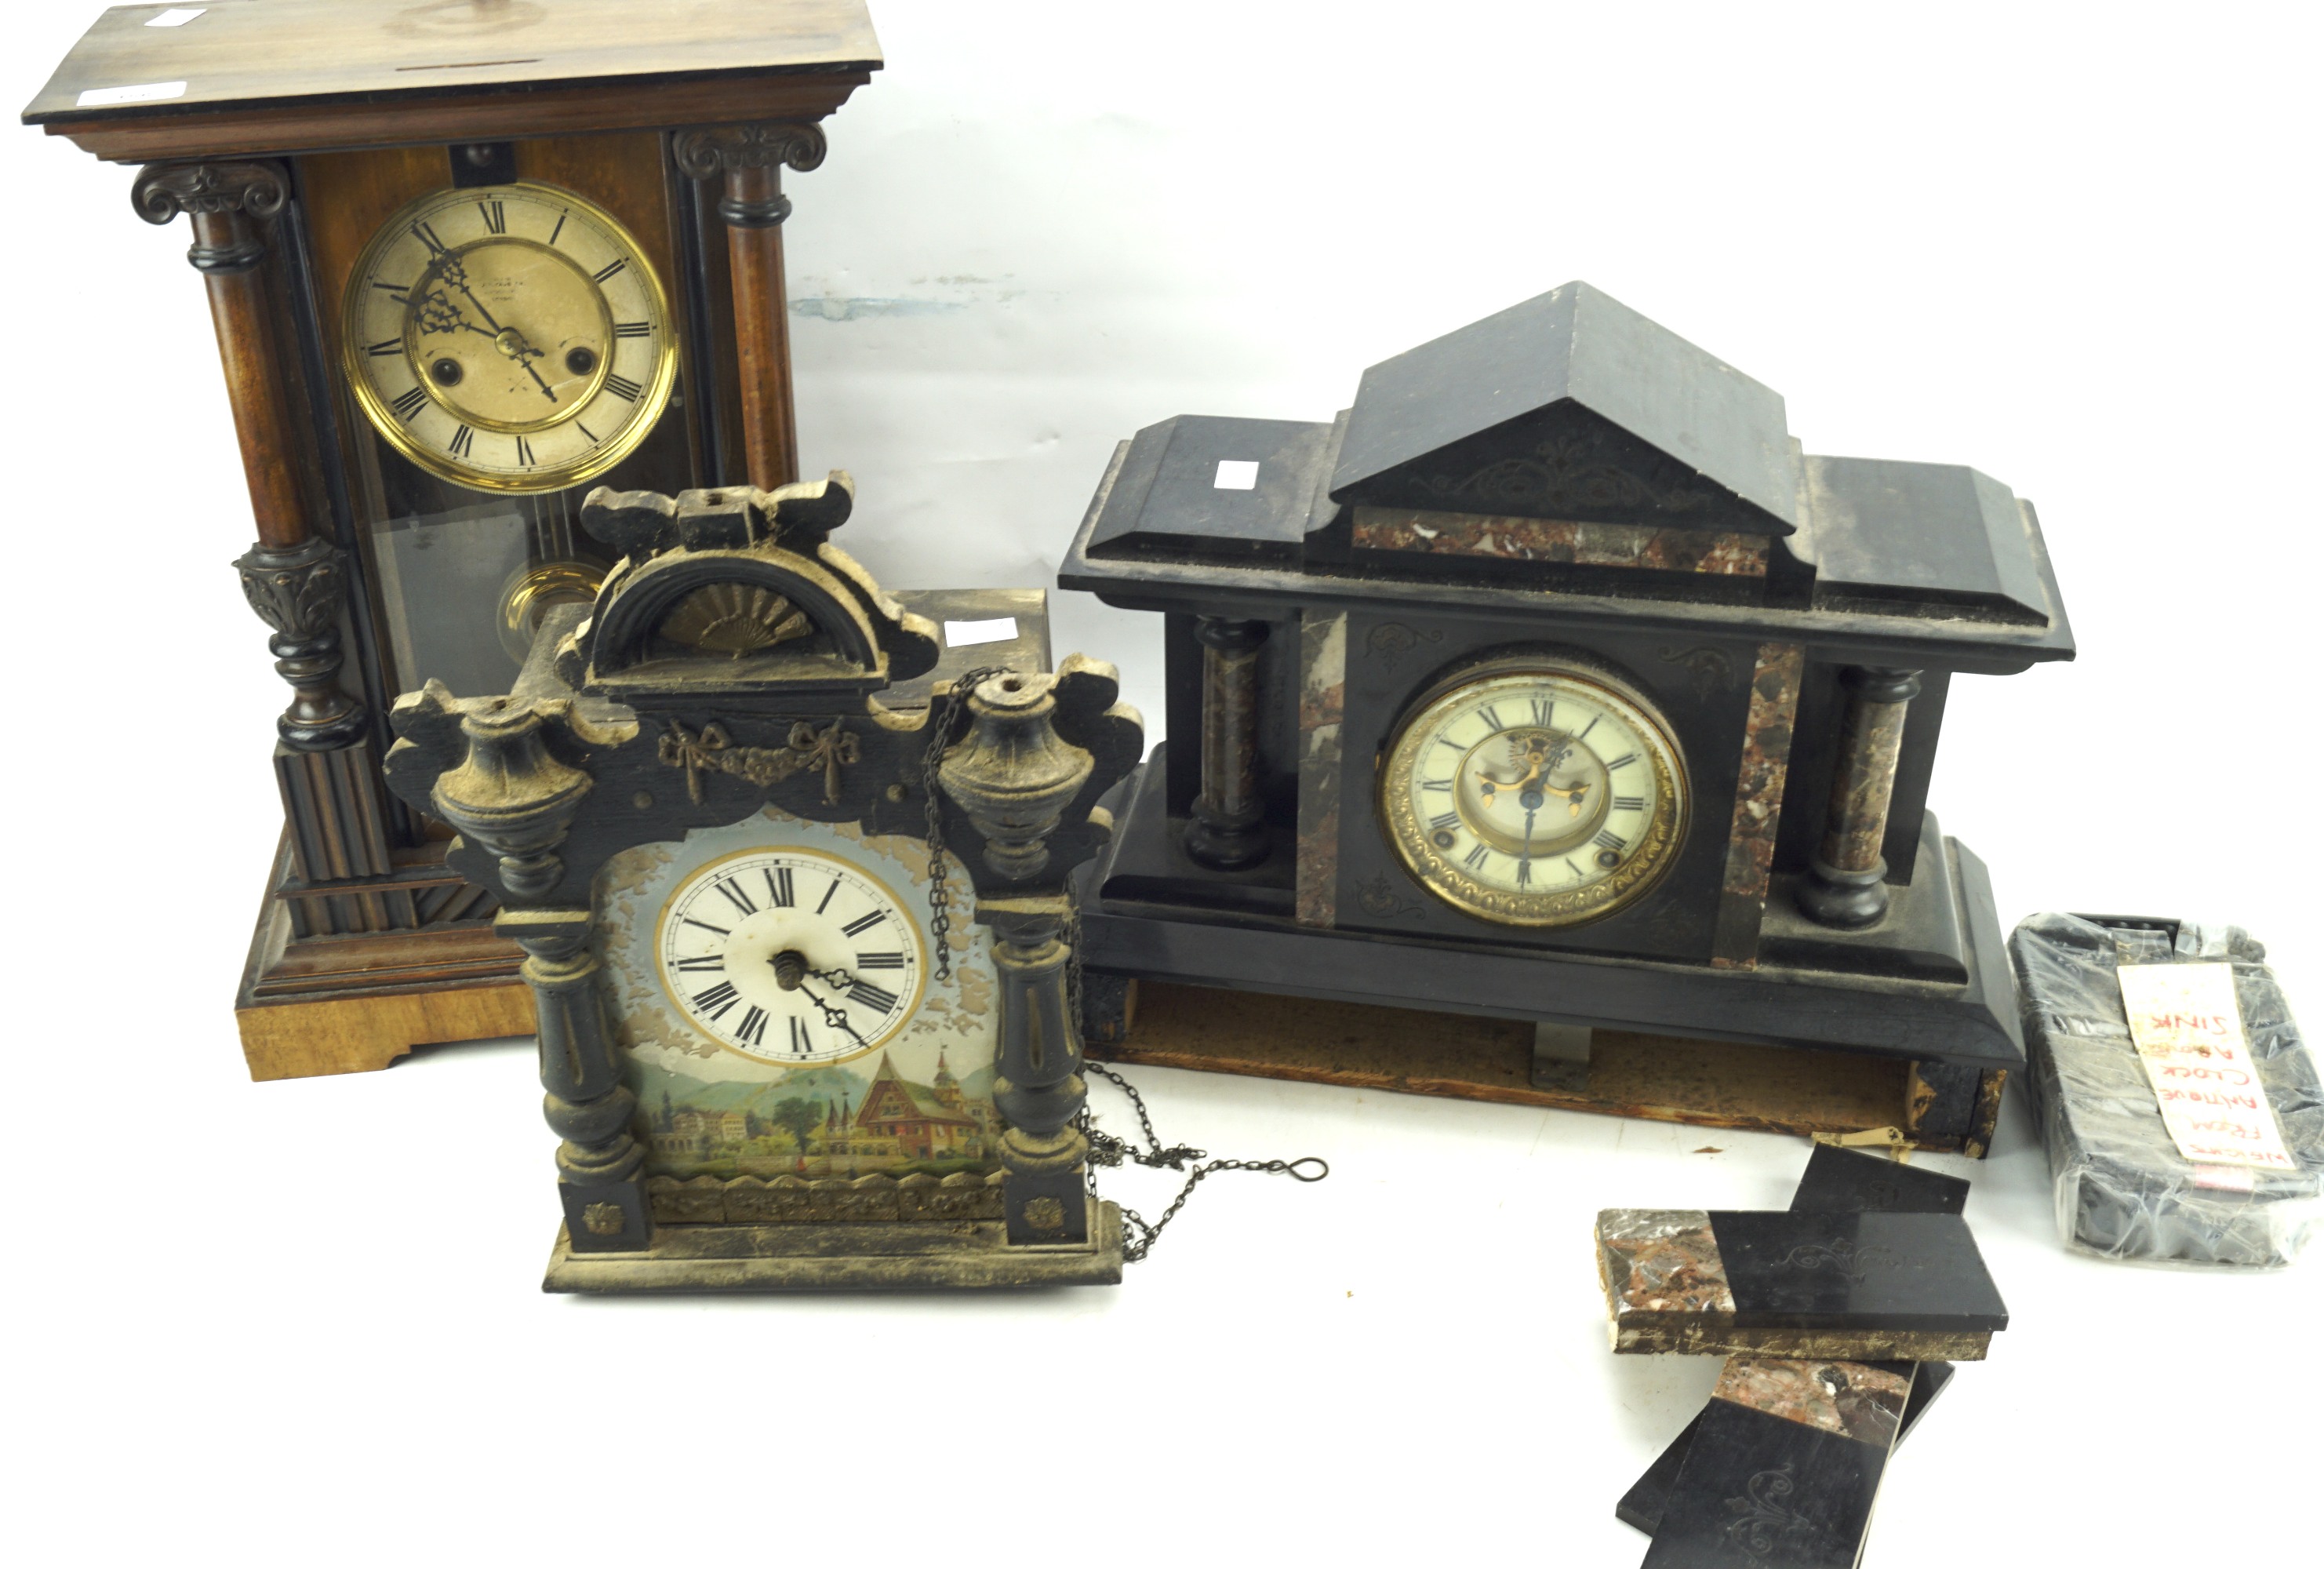 Two wall clocks and slate clock.